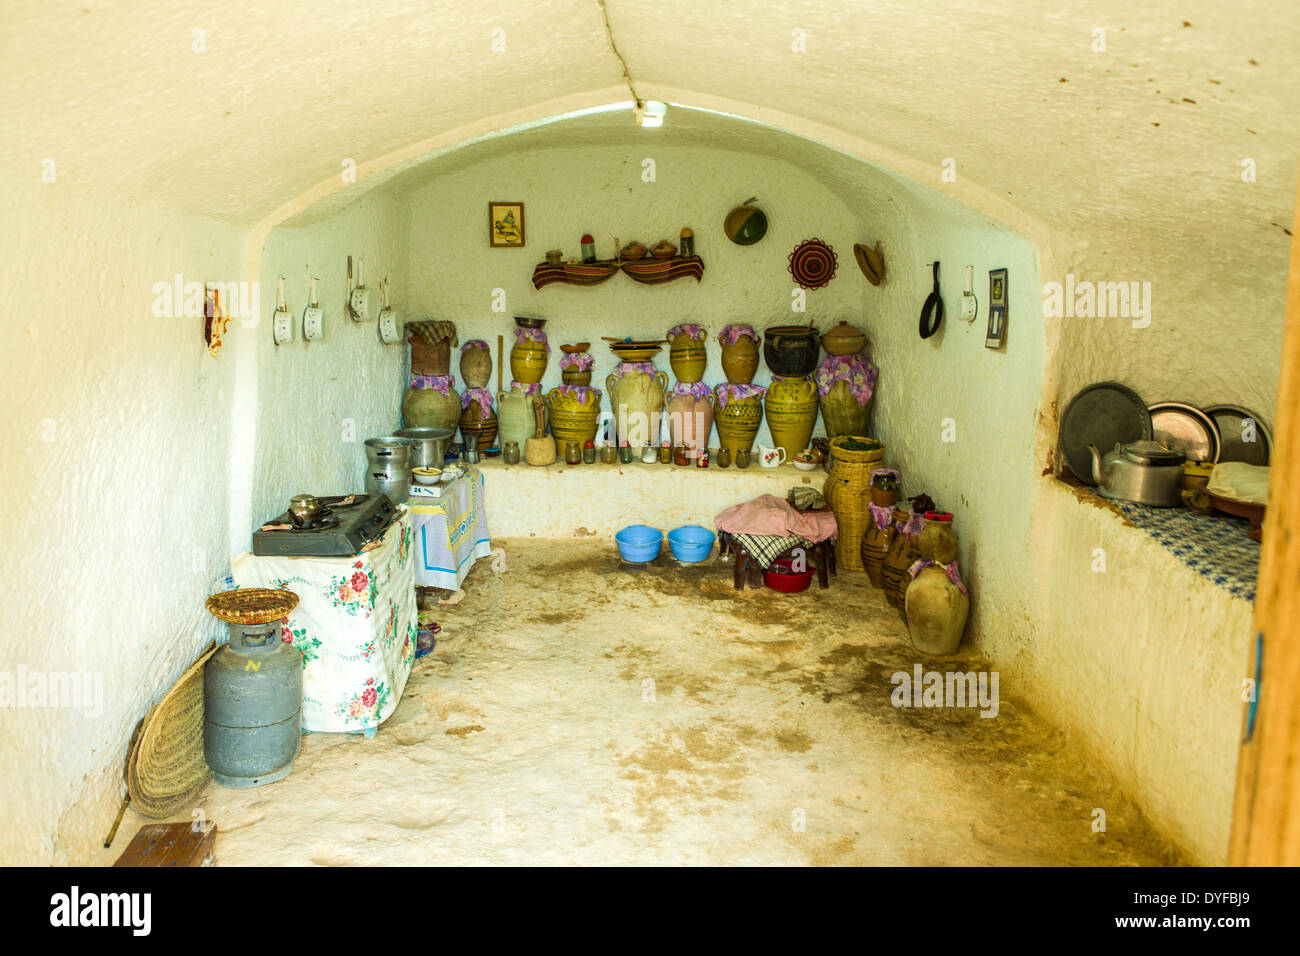 Food storage area of Berber community in Tunisia Stock Photo